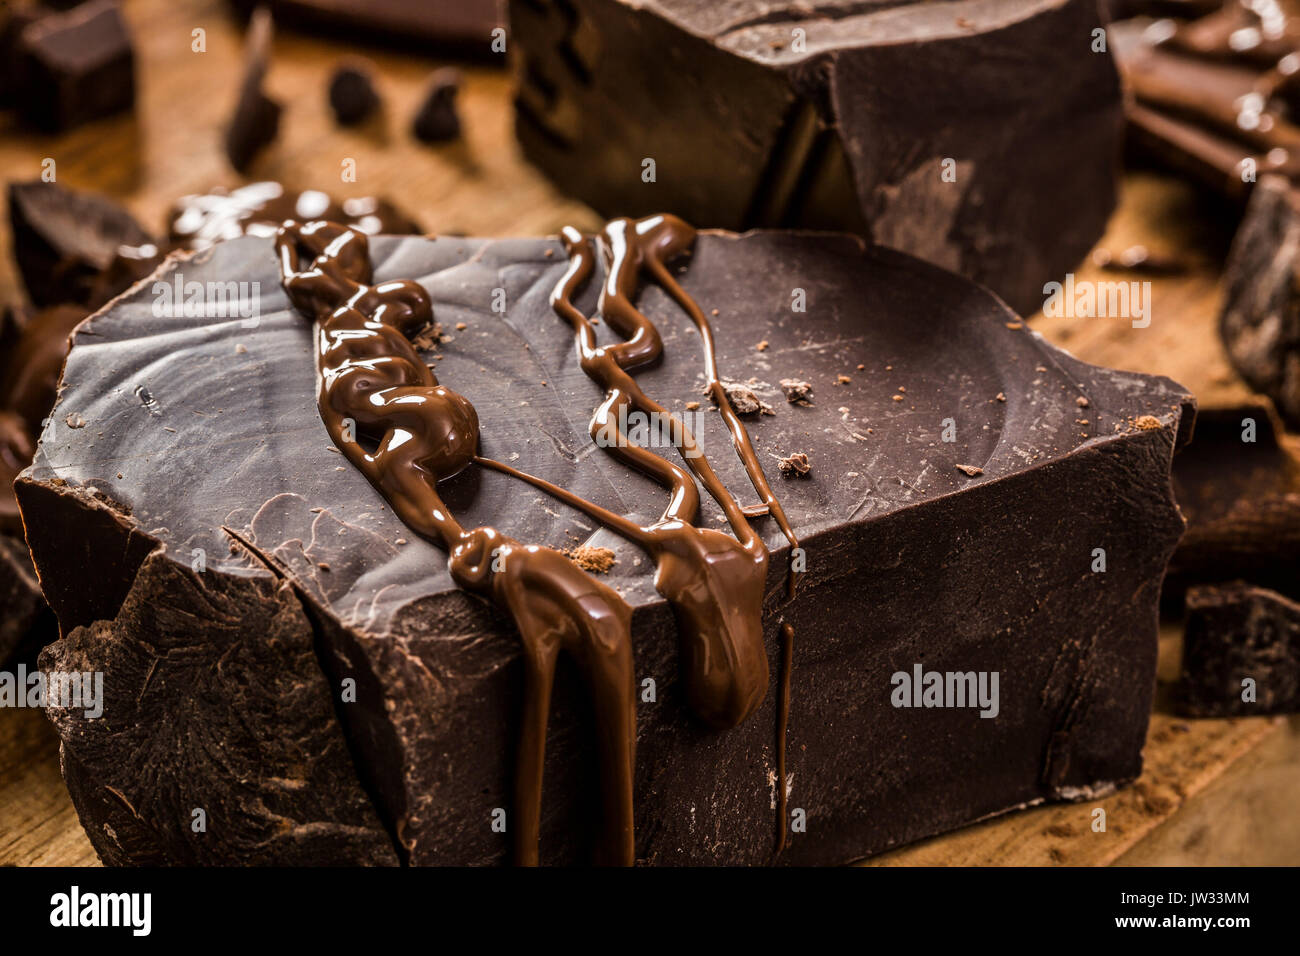 Geschmolzene Schokolade auf große dunkle Schokolade Klumpen Stockfoto